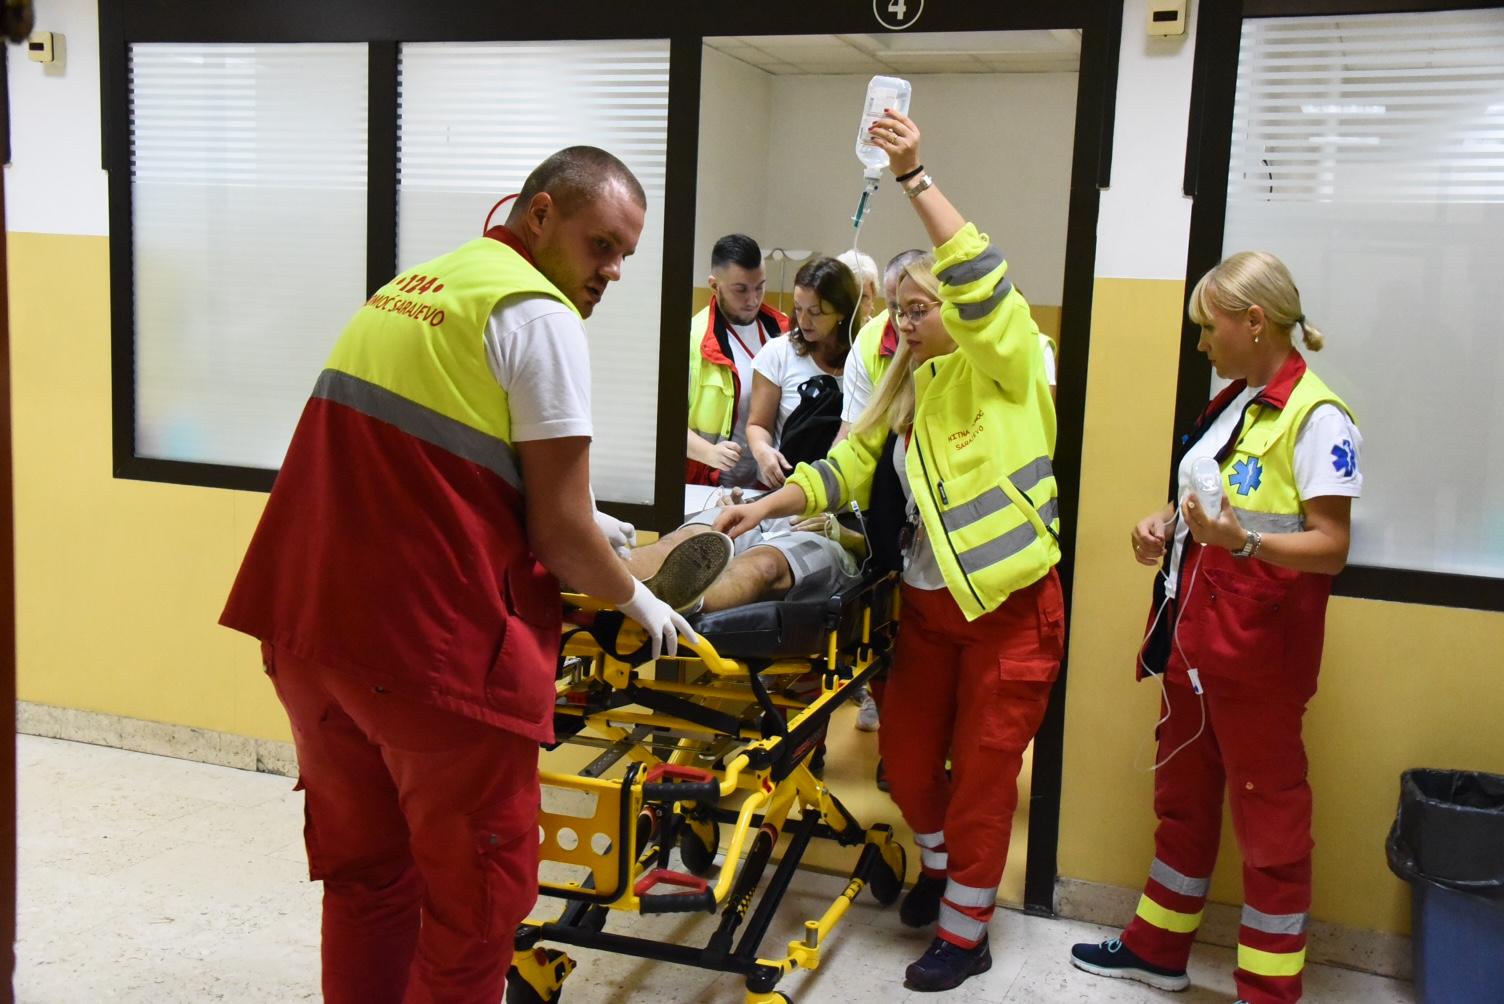 Nakon ukazane pomoći pacijenti se odvoze na daljnje pružanje lejakrske pomoći - Avaz